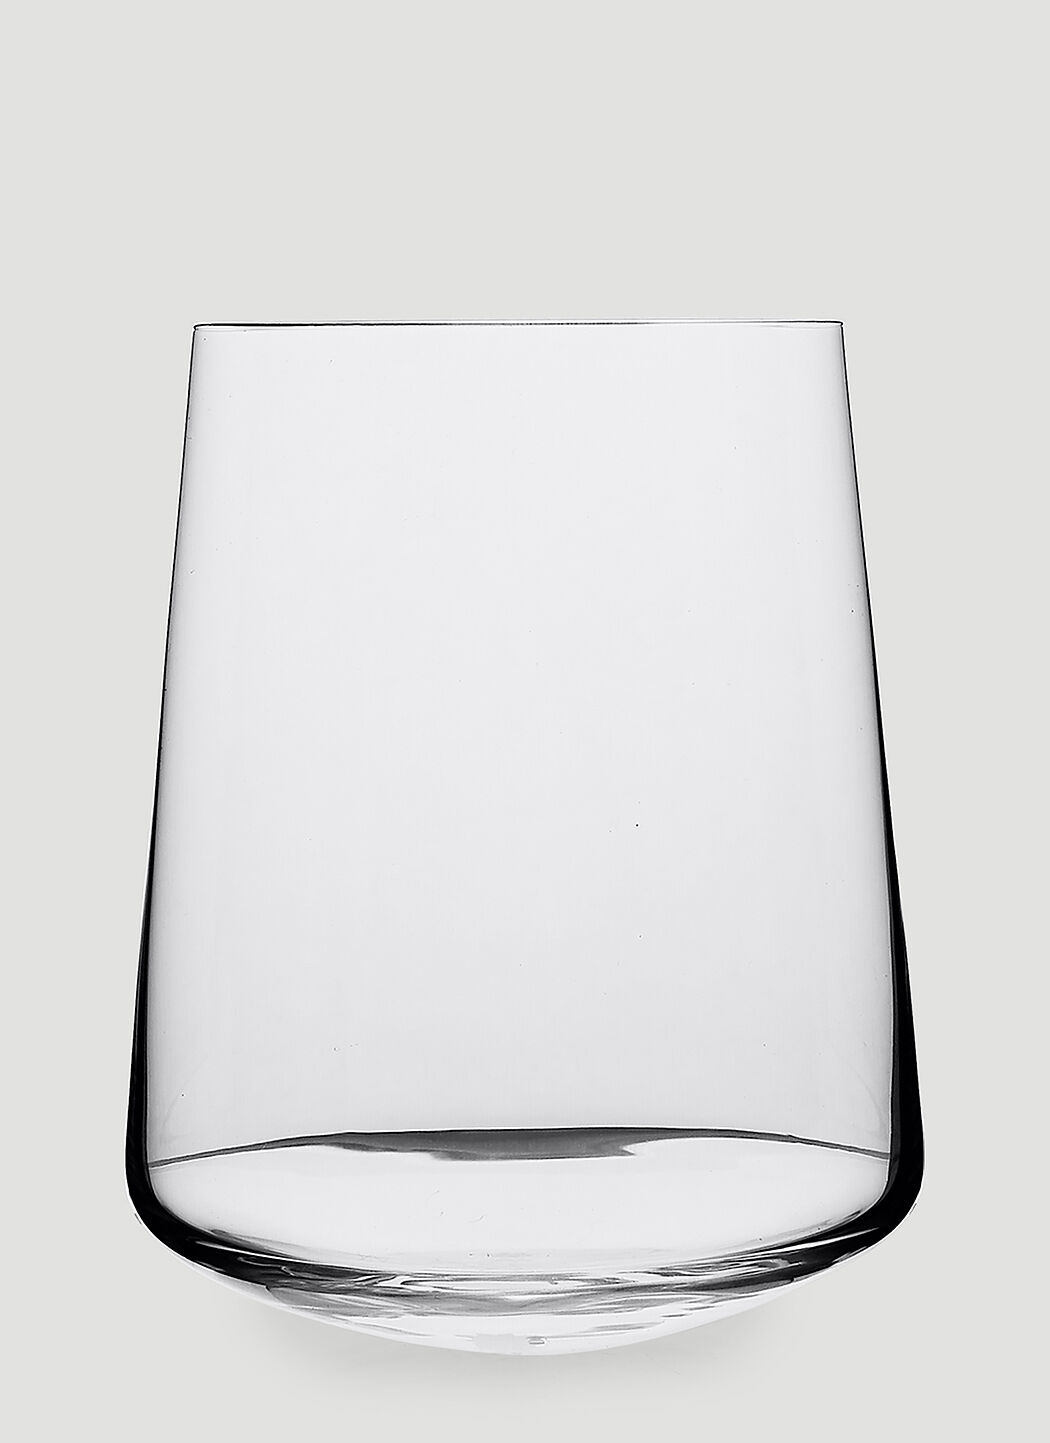 Ichendorf Milano Set of Two Stand Up White Wine Glasses White wps0691175